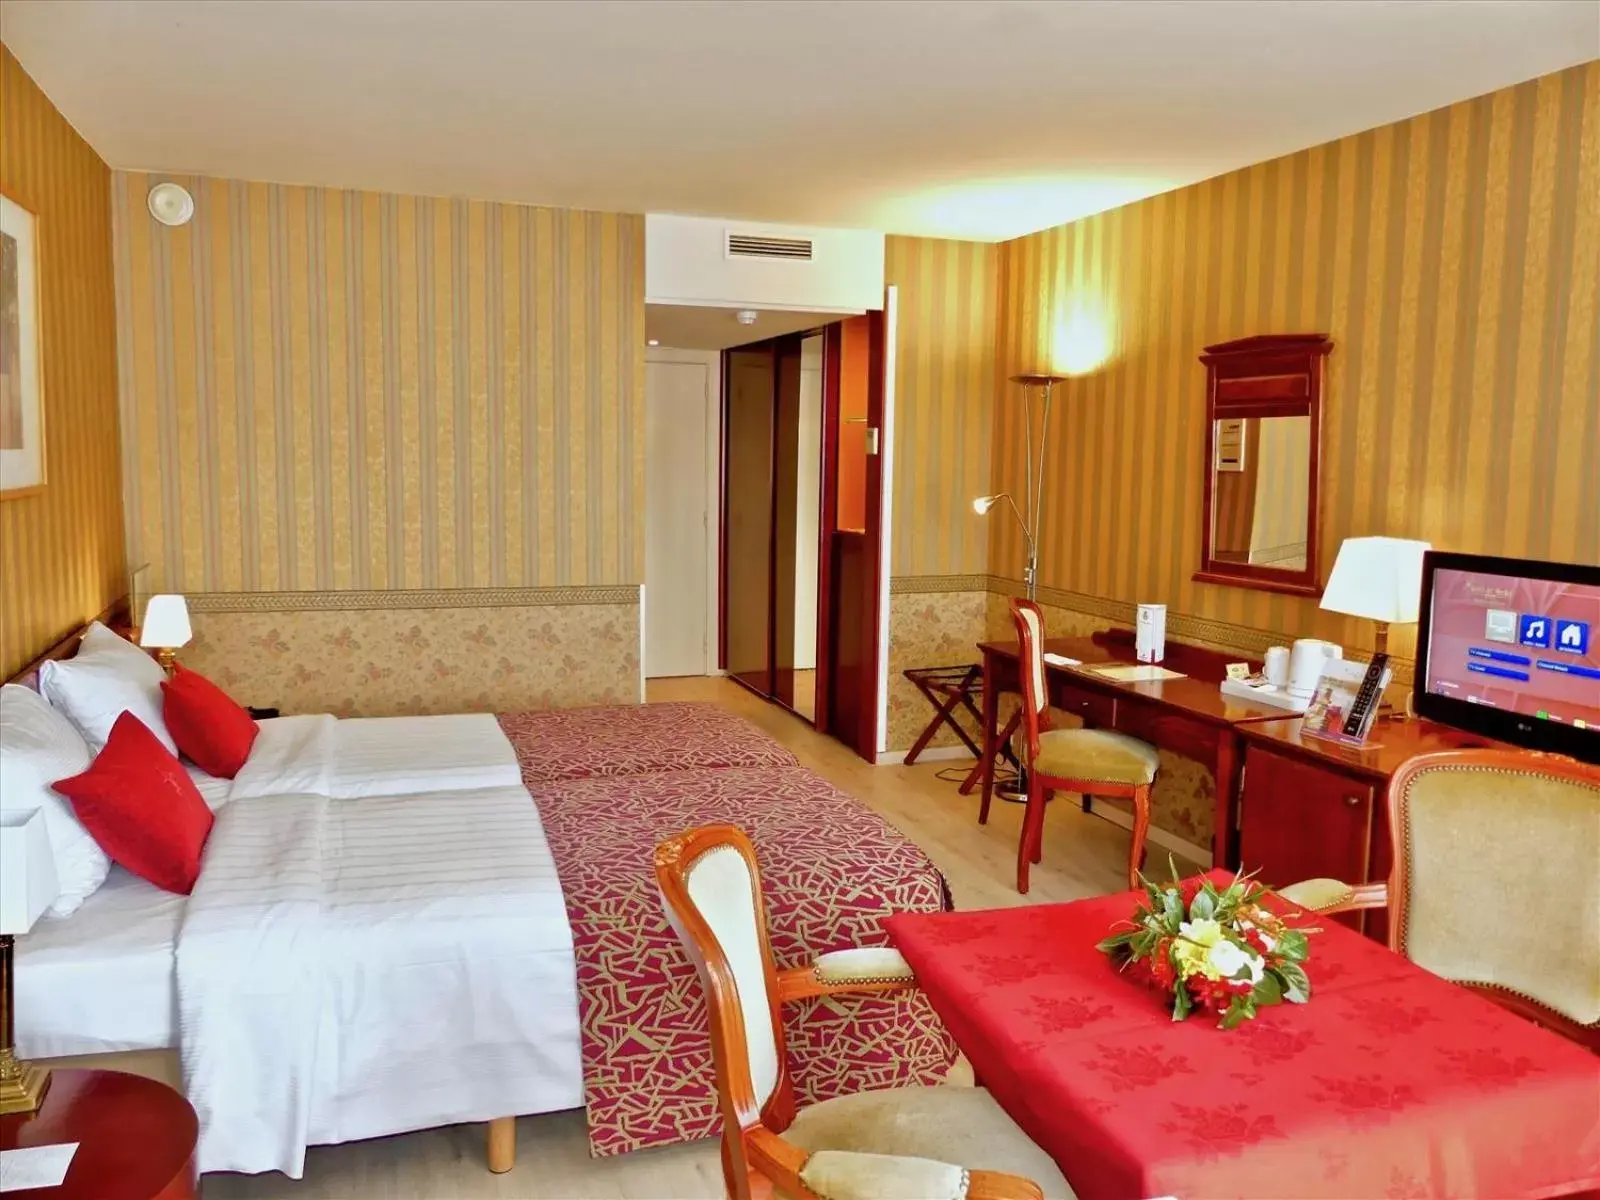 Photo of the whole room in Golden Tulip Hotel de’ Medici